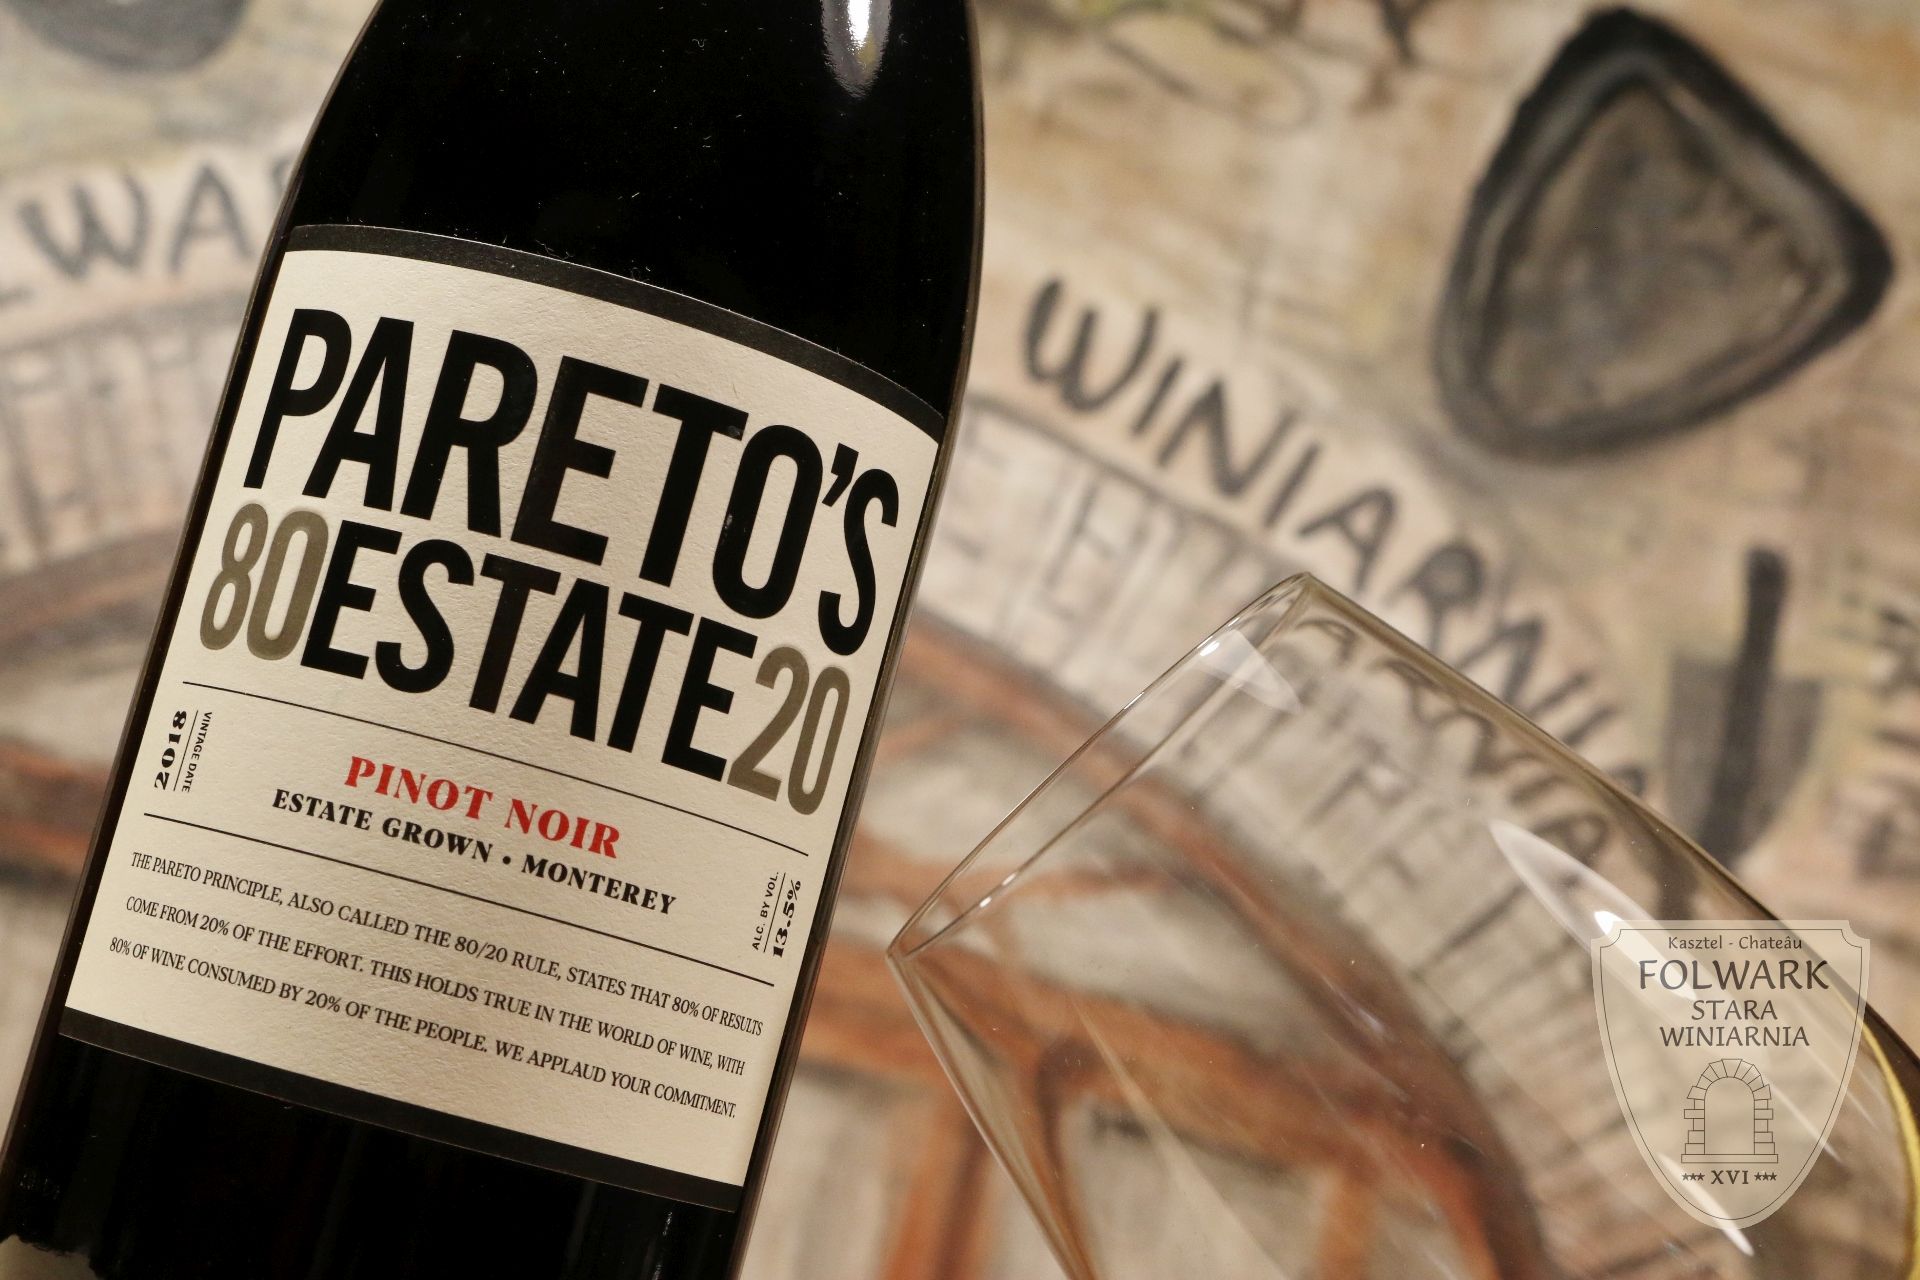 Pareto's Pinot Noir - Folwark Stara Winiarnia poleca wina z Kalifornii